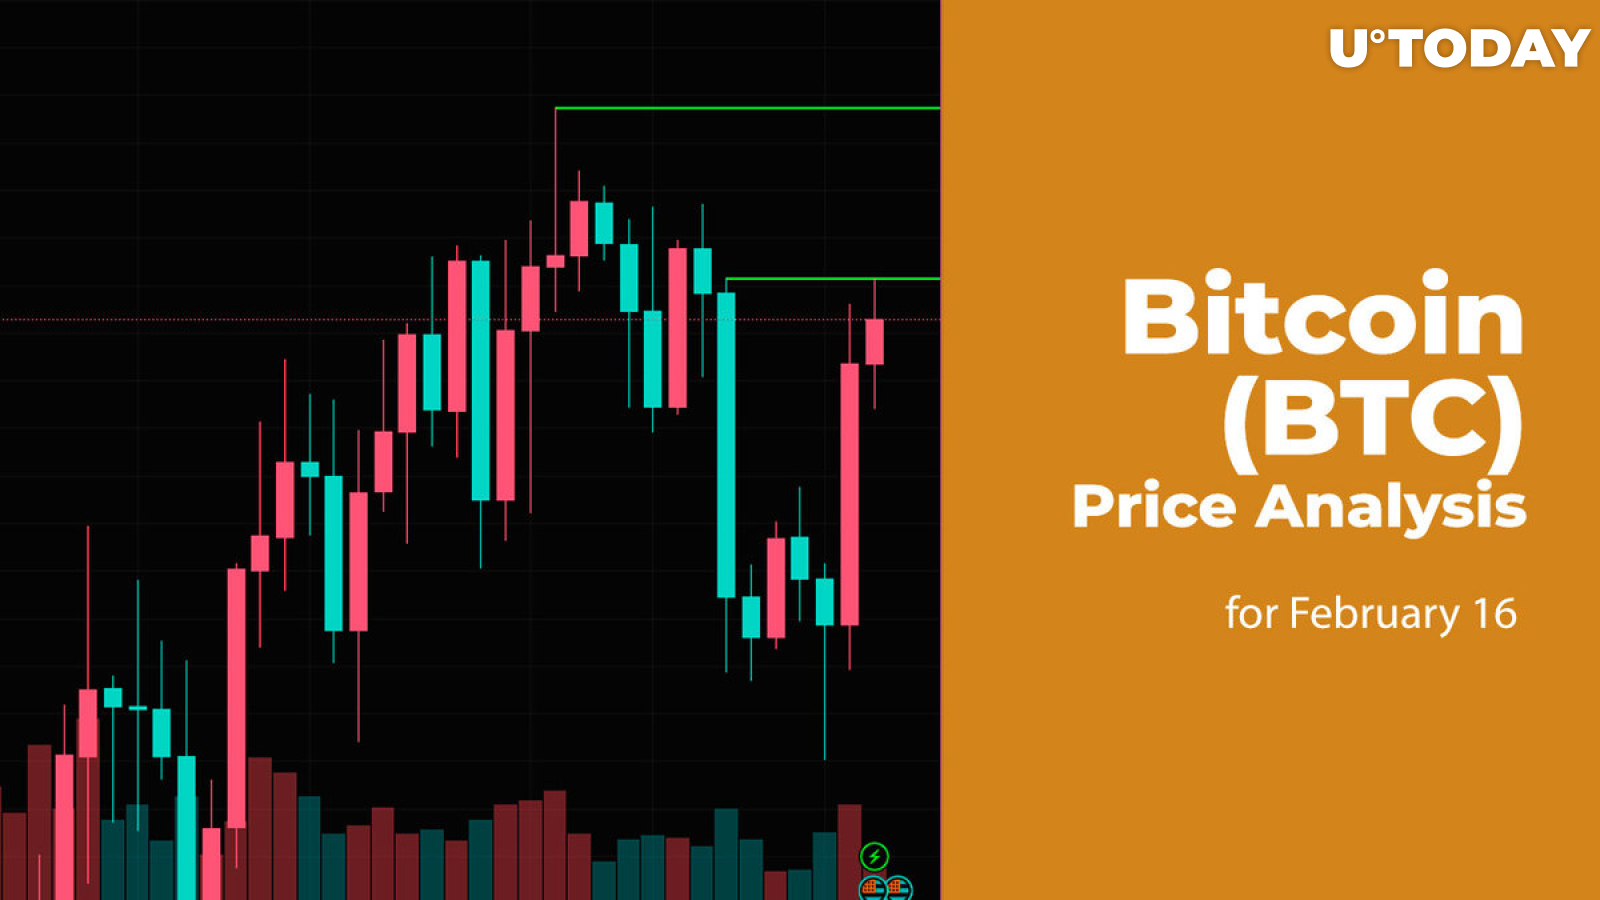 Bitcoin (BTC) Price Analysis for February 16